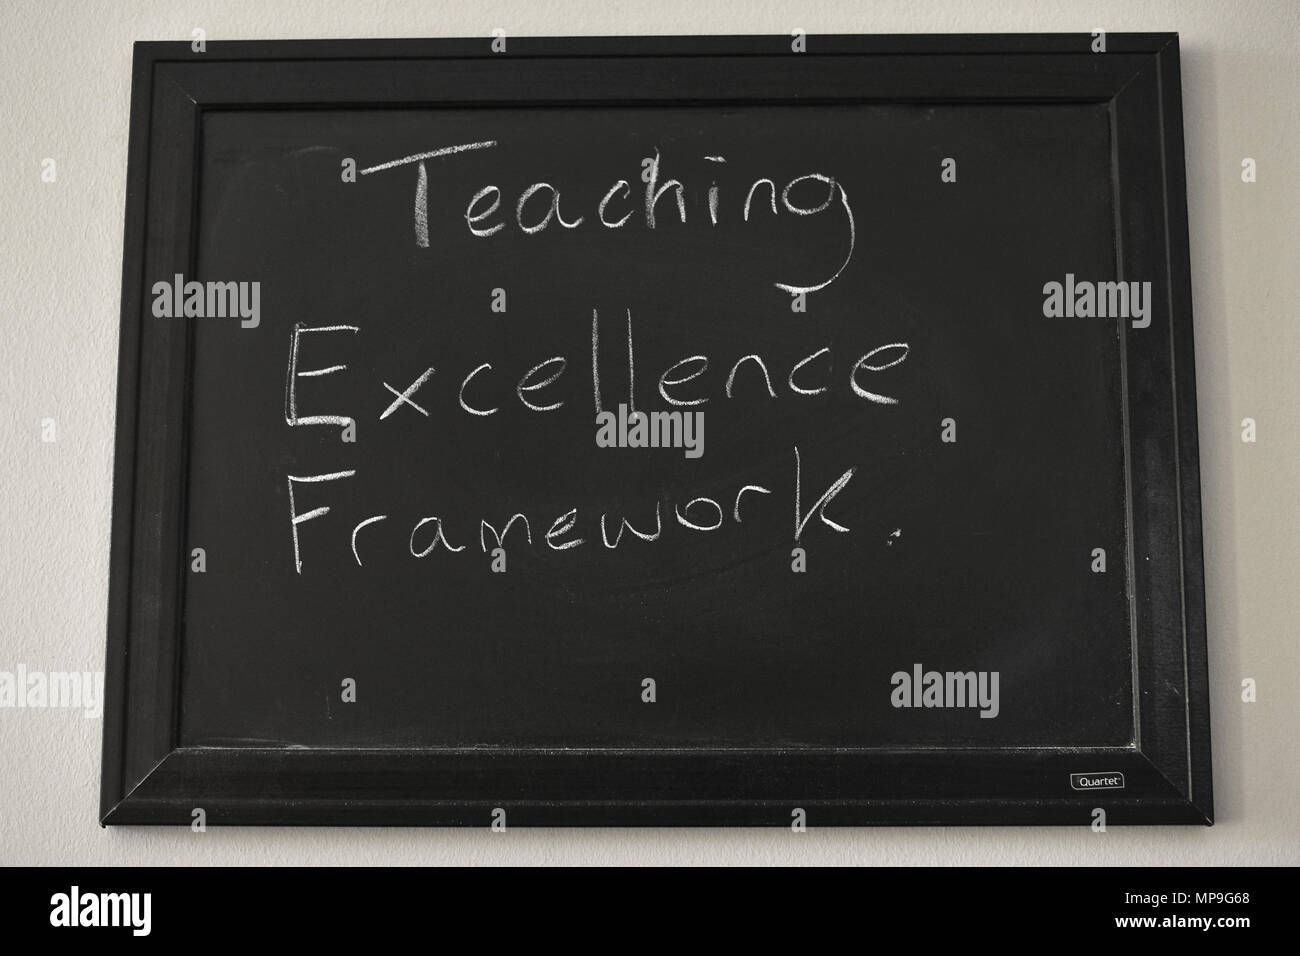 Teaching Excellence Framework written in white chalk on a wall mounted blackboard. Stock Photo